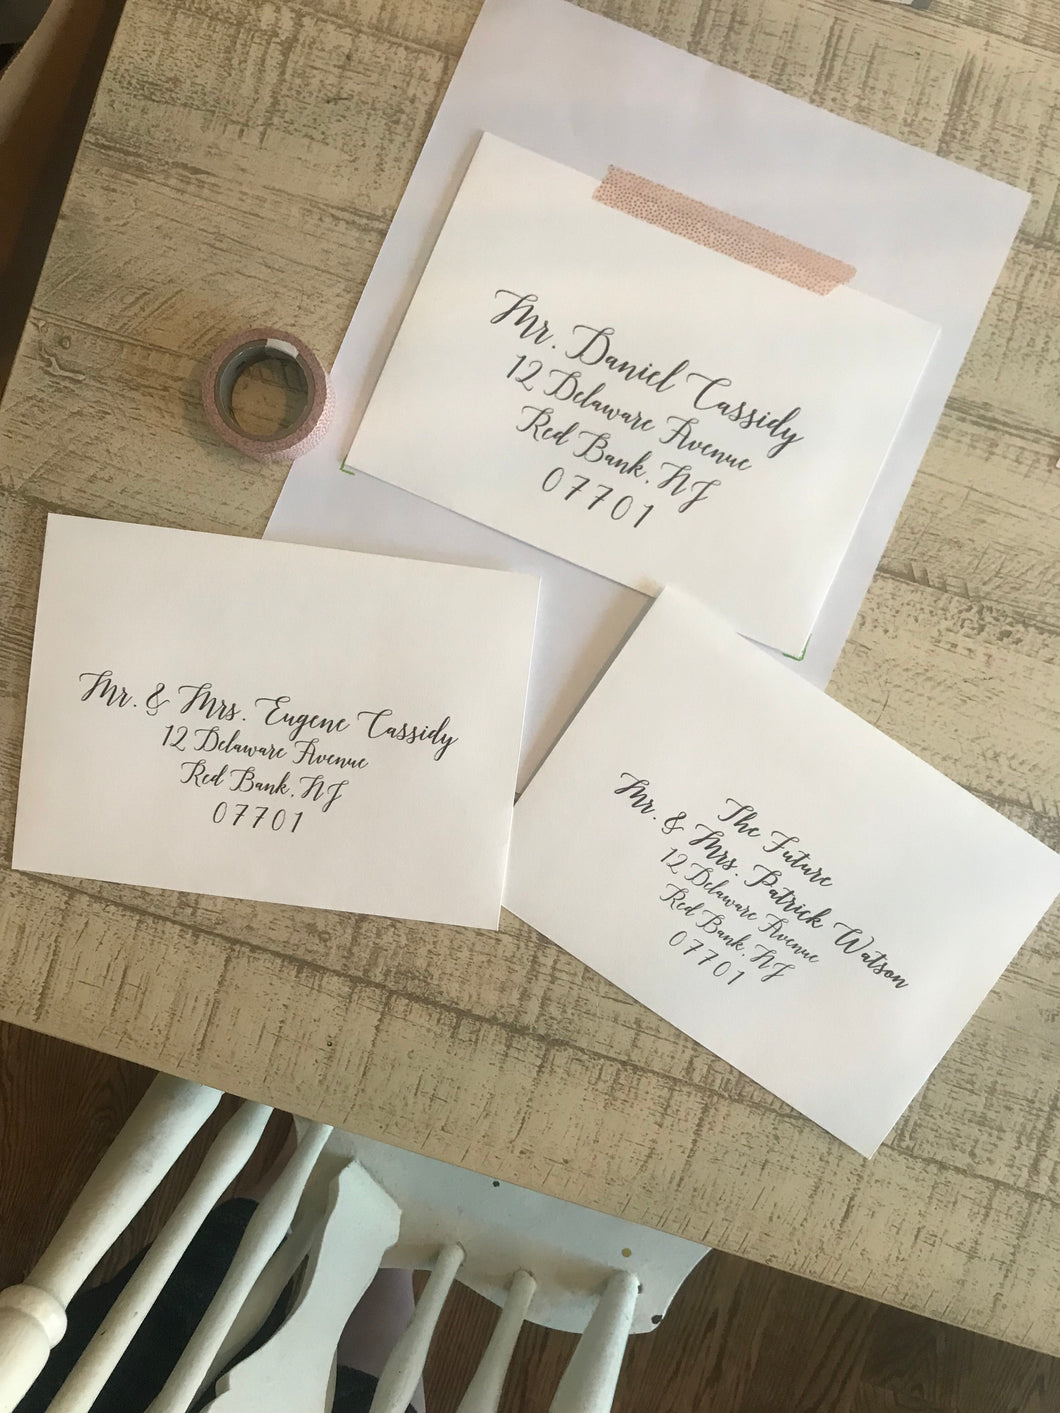 Printed Envelopes